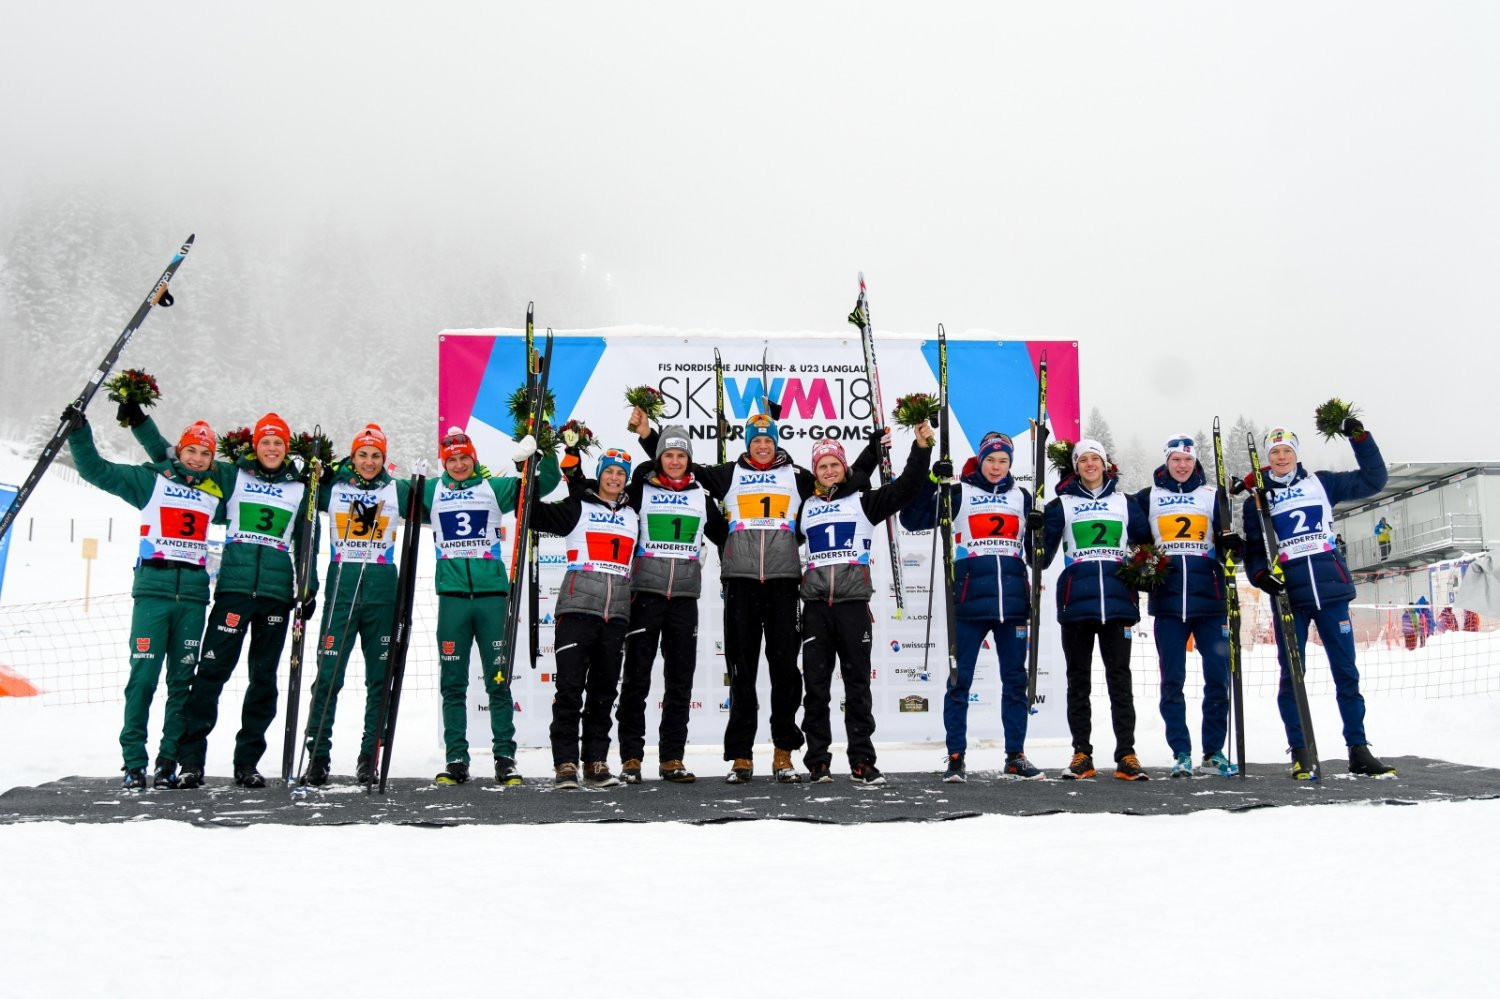 Austria claimed the 4x5km team title in Kandersteg ©JWSC2018